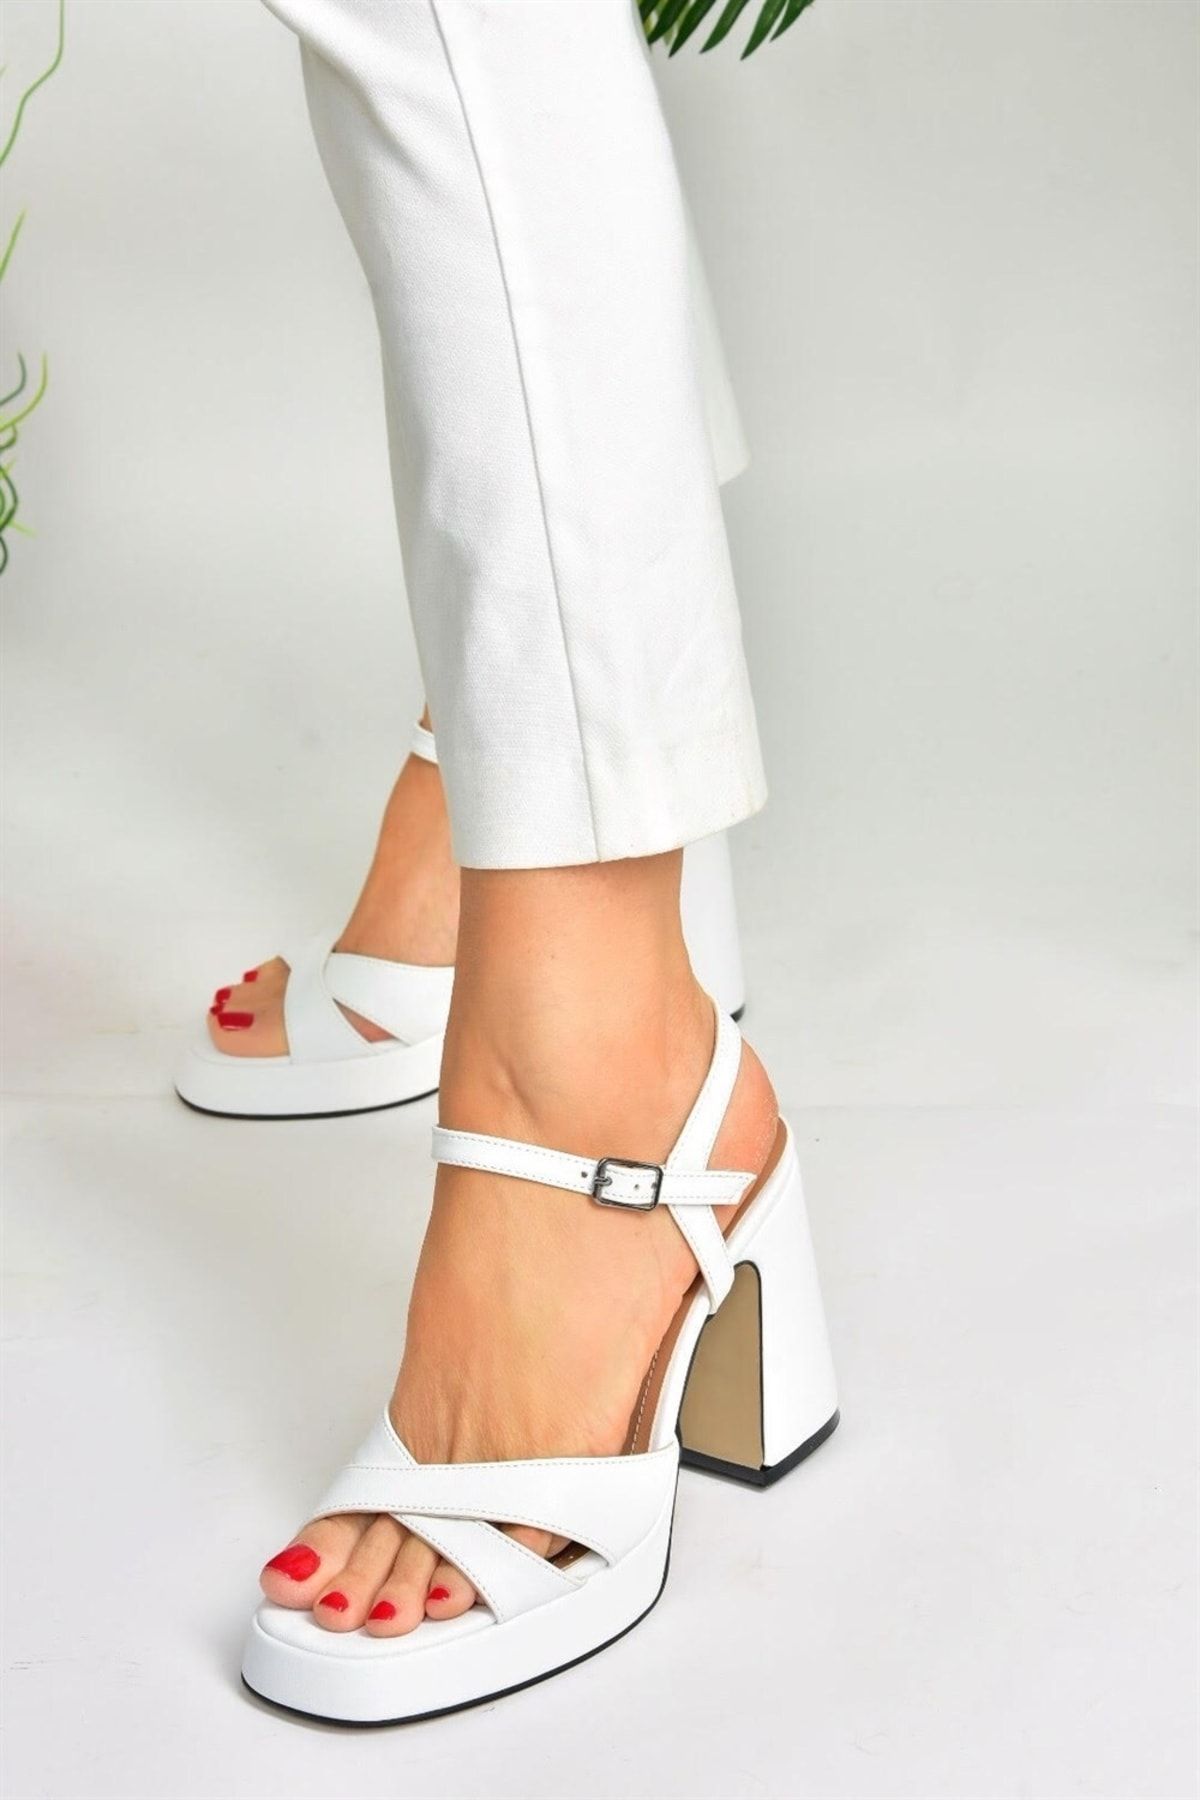 Fox Shoes Beyaz Platform Topuklu Kadın Ayakkabı M404100109